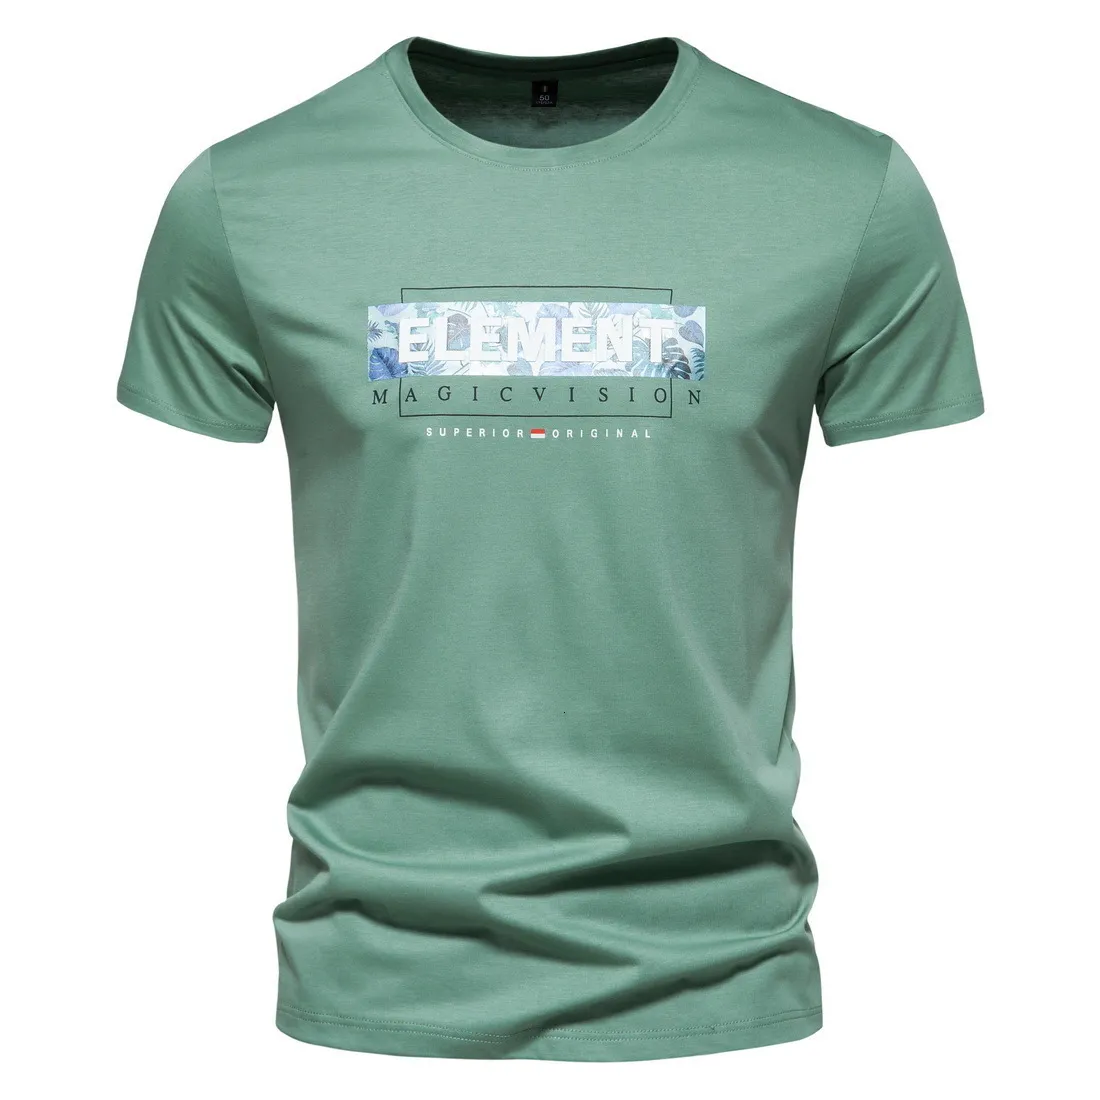 Herren T-Shirts Sommer Herren Farbsiebdruck Casual Kurzarm T - Shirt 230425